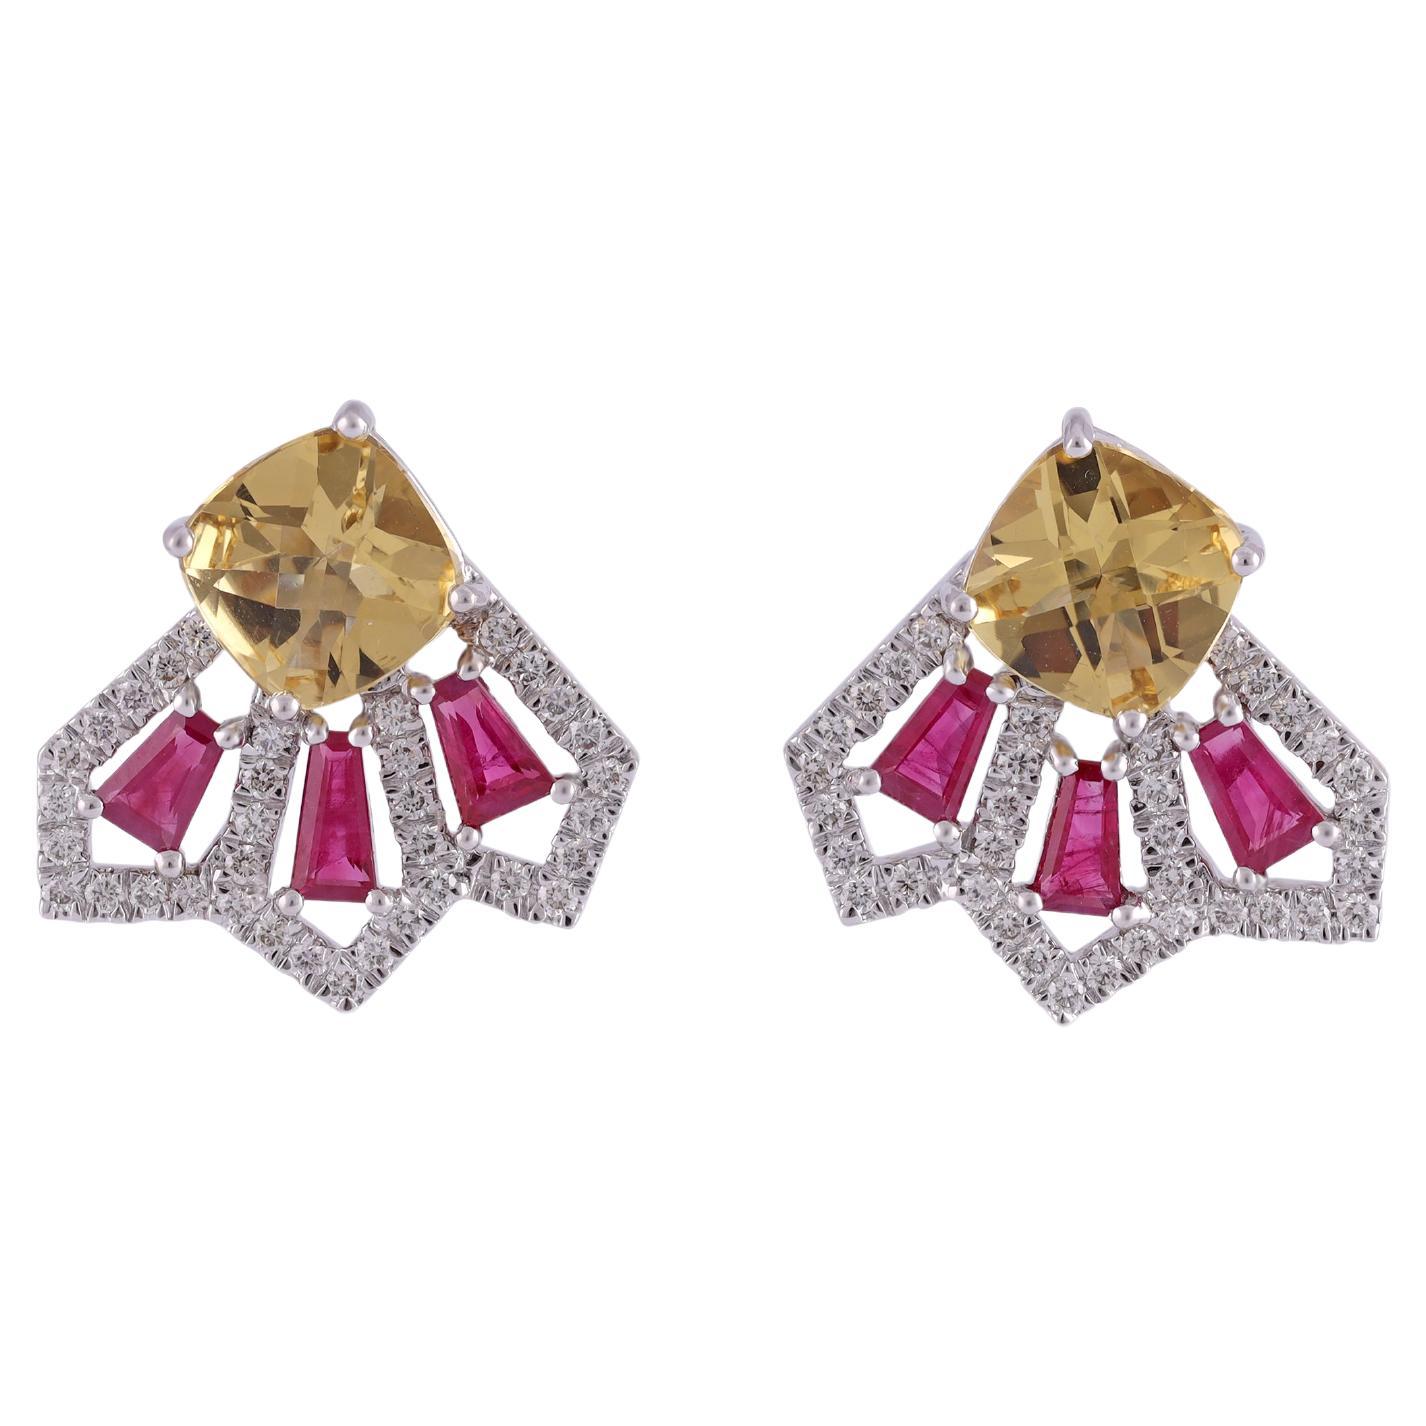 2.30 Carat Clear Ruby & Diamond Earring Studs in 18k Gold For Sale